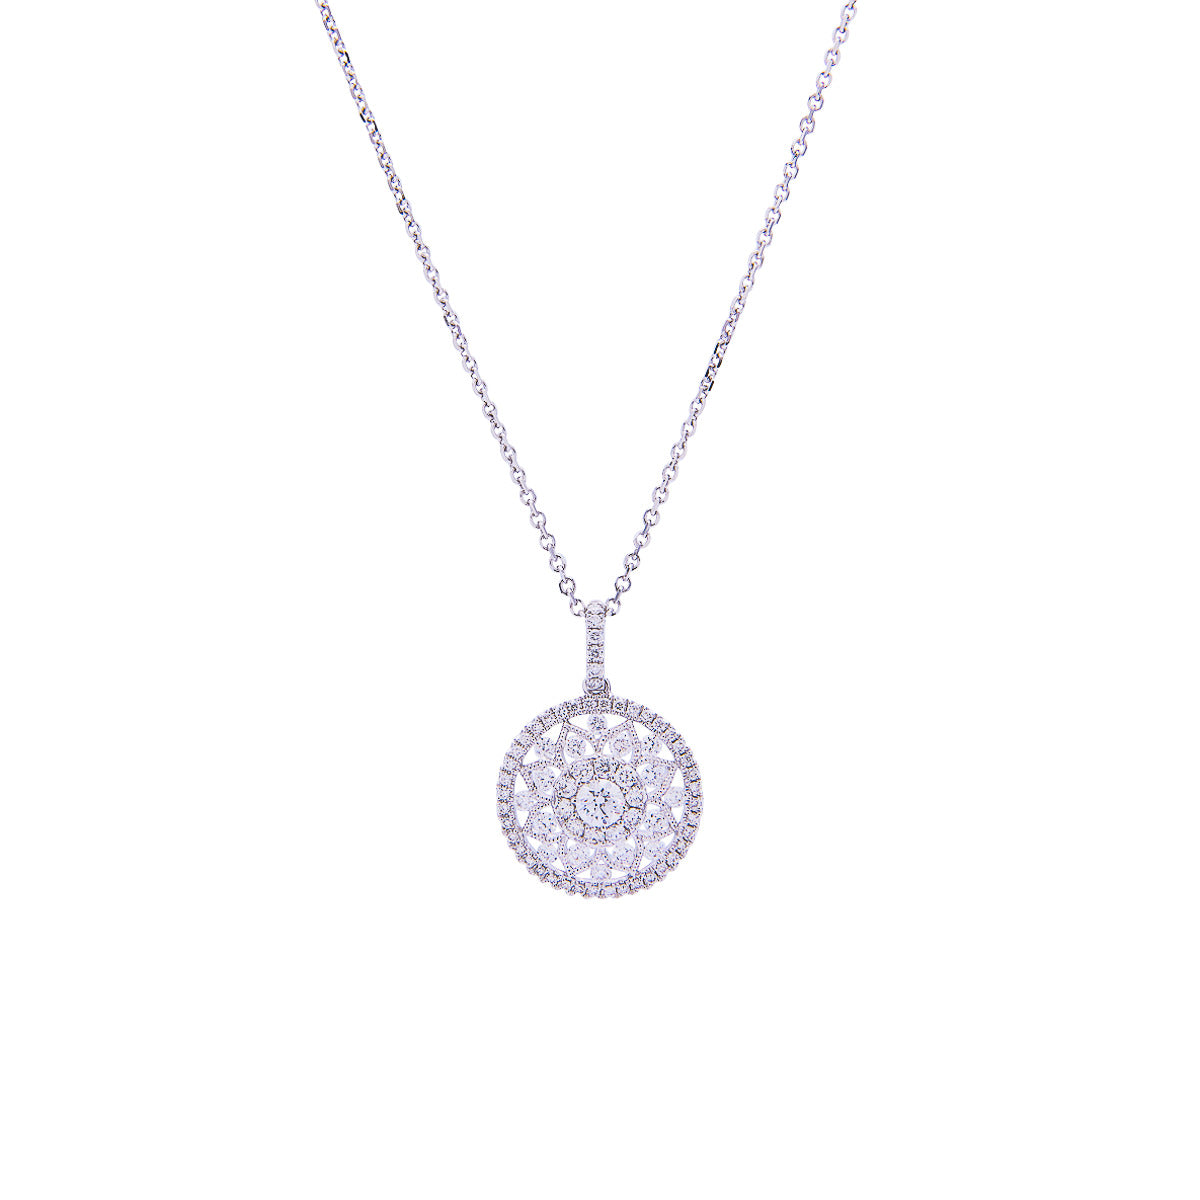 Sabel Collection 14K White Gold Diamond Filigree Design Pendant Necklace